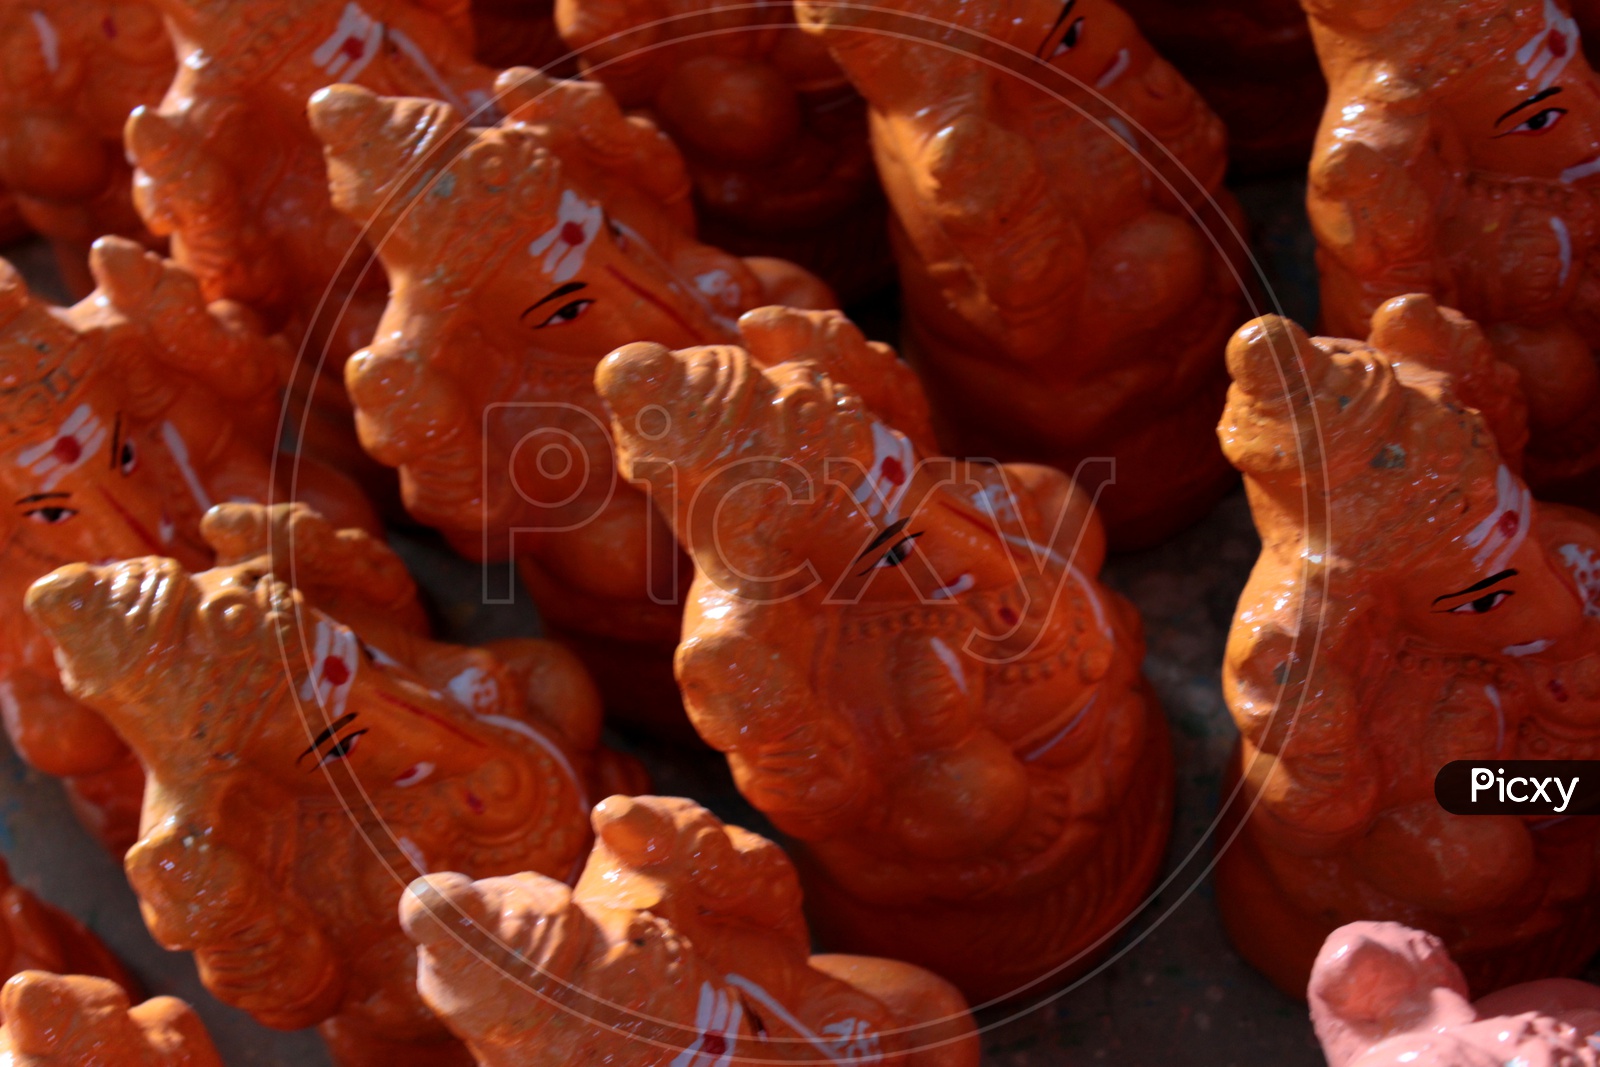 The eco-friendly Clay Ganesha idols